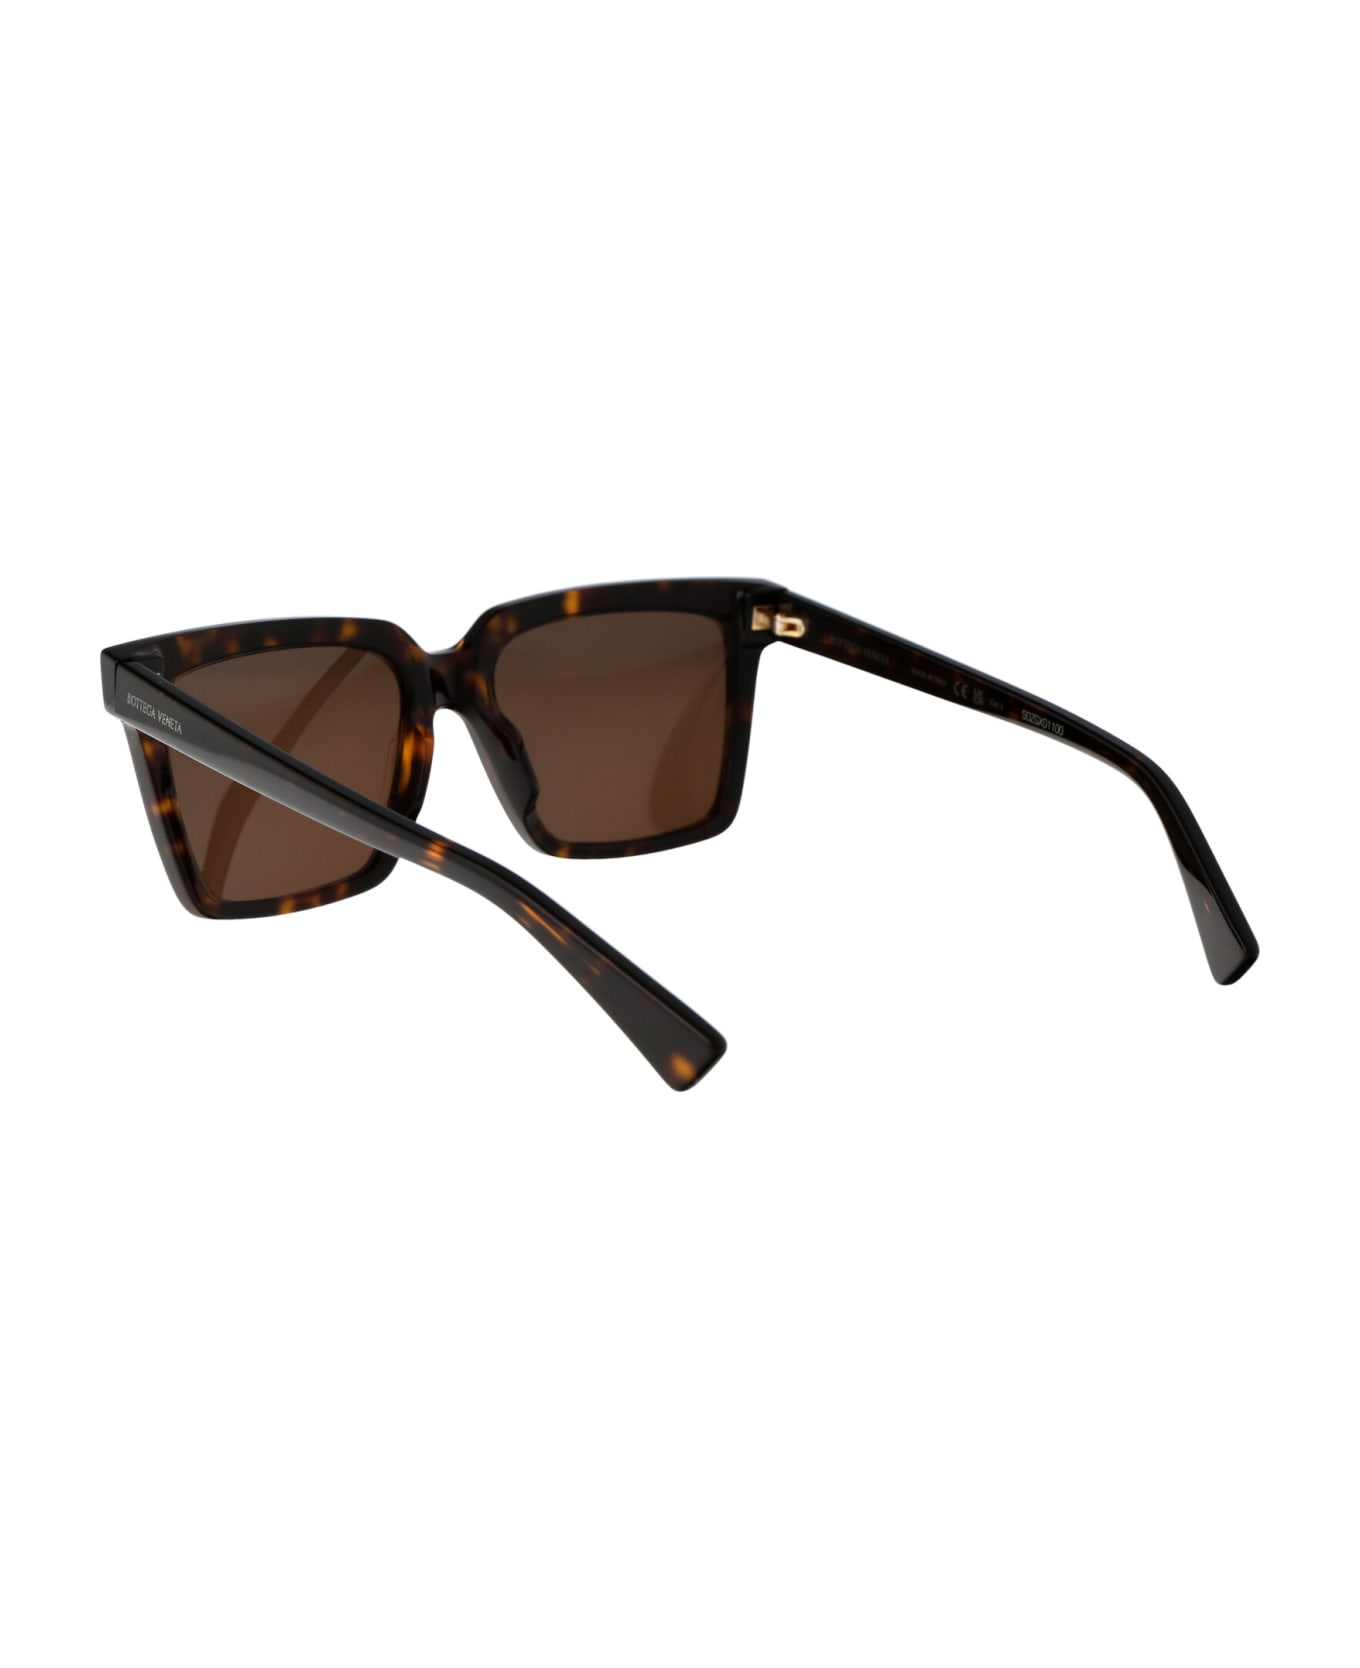 Bottega Veneta Eyewear Bv1254s Sunglasses - 002 HAVANA HAVANA BROWN